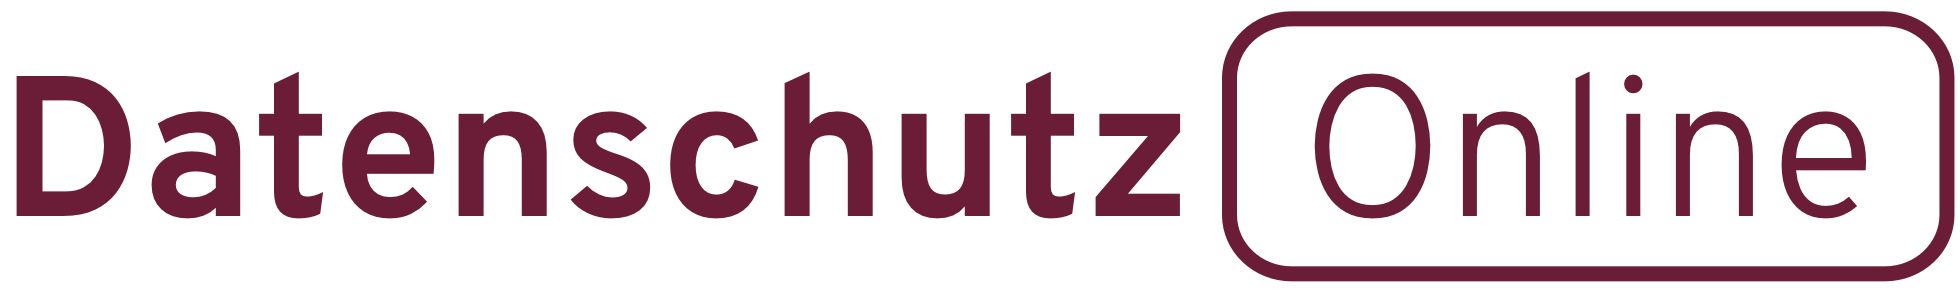 datenschutz-online-logo